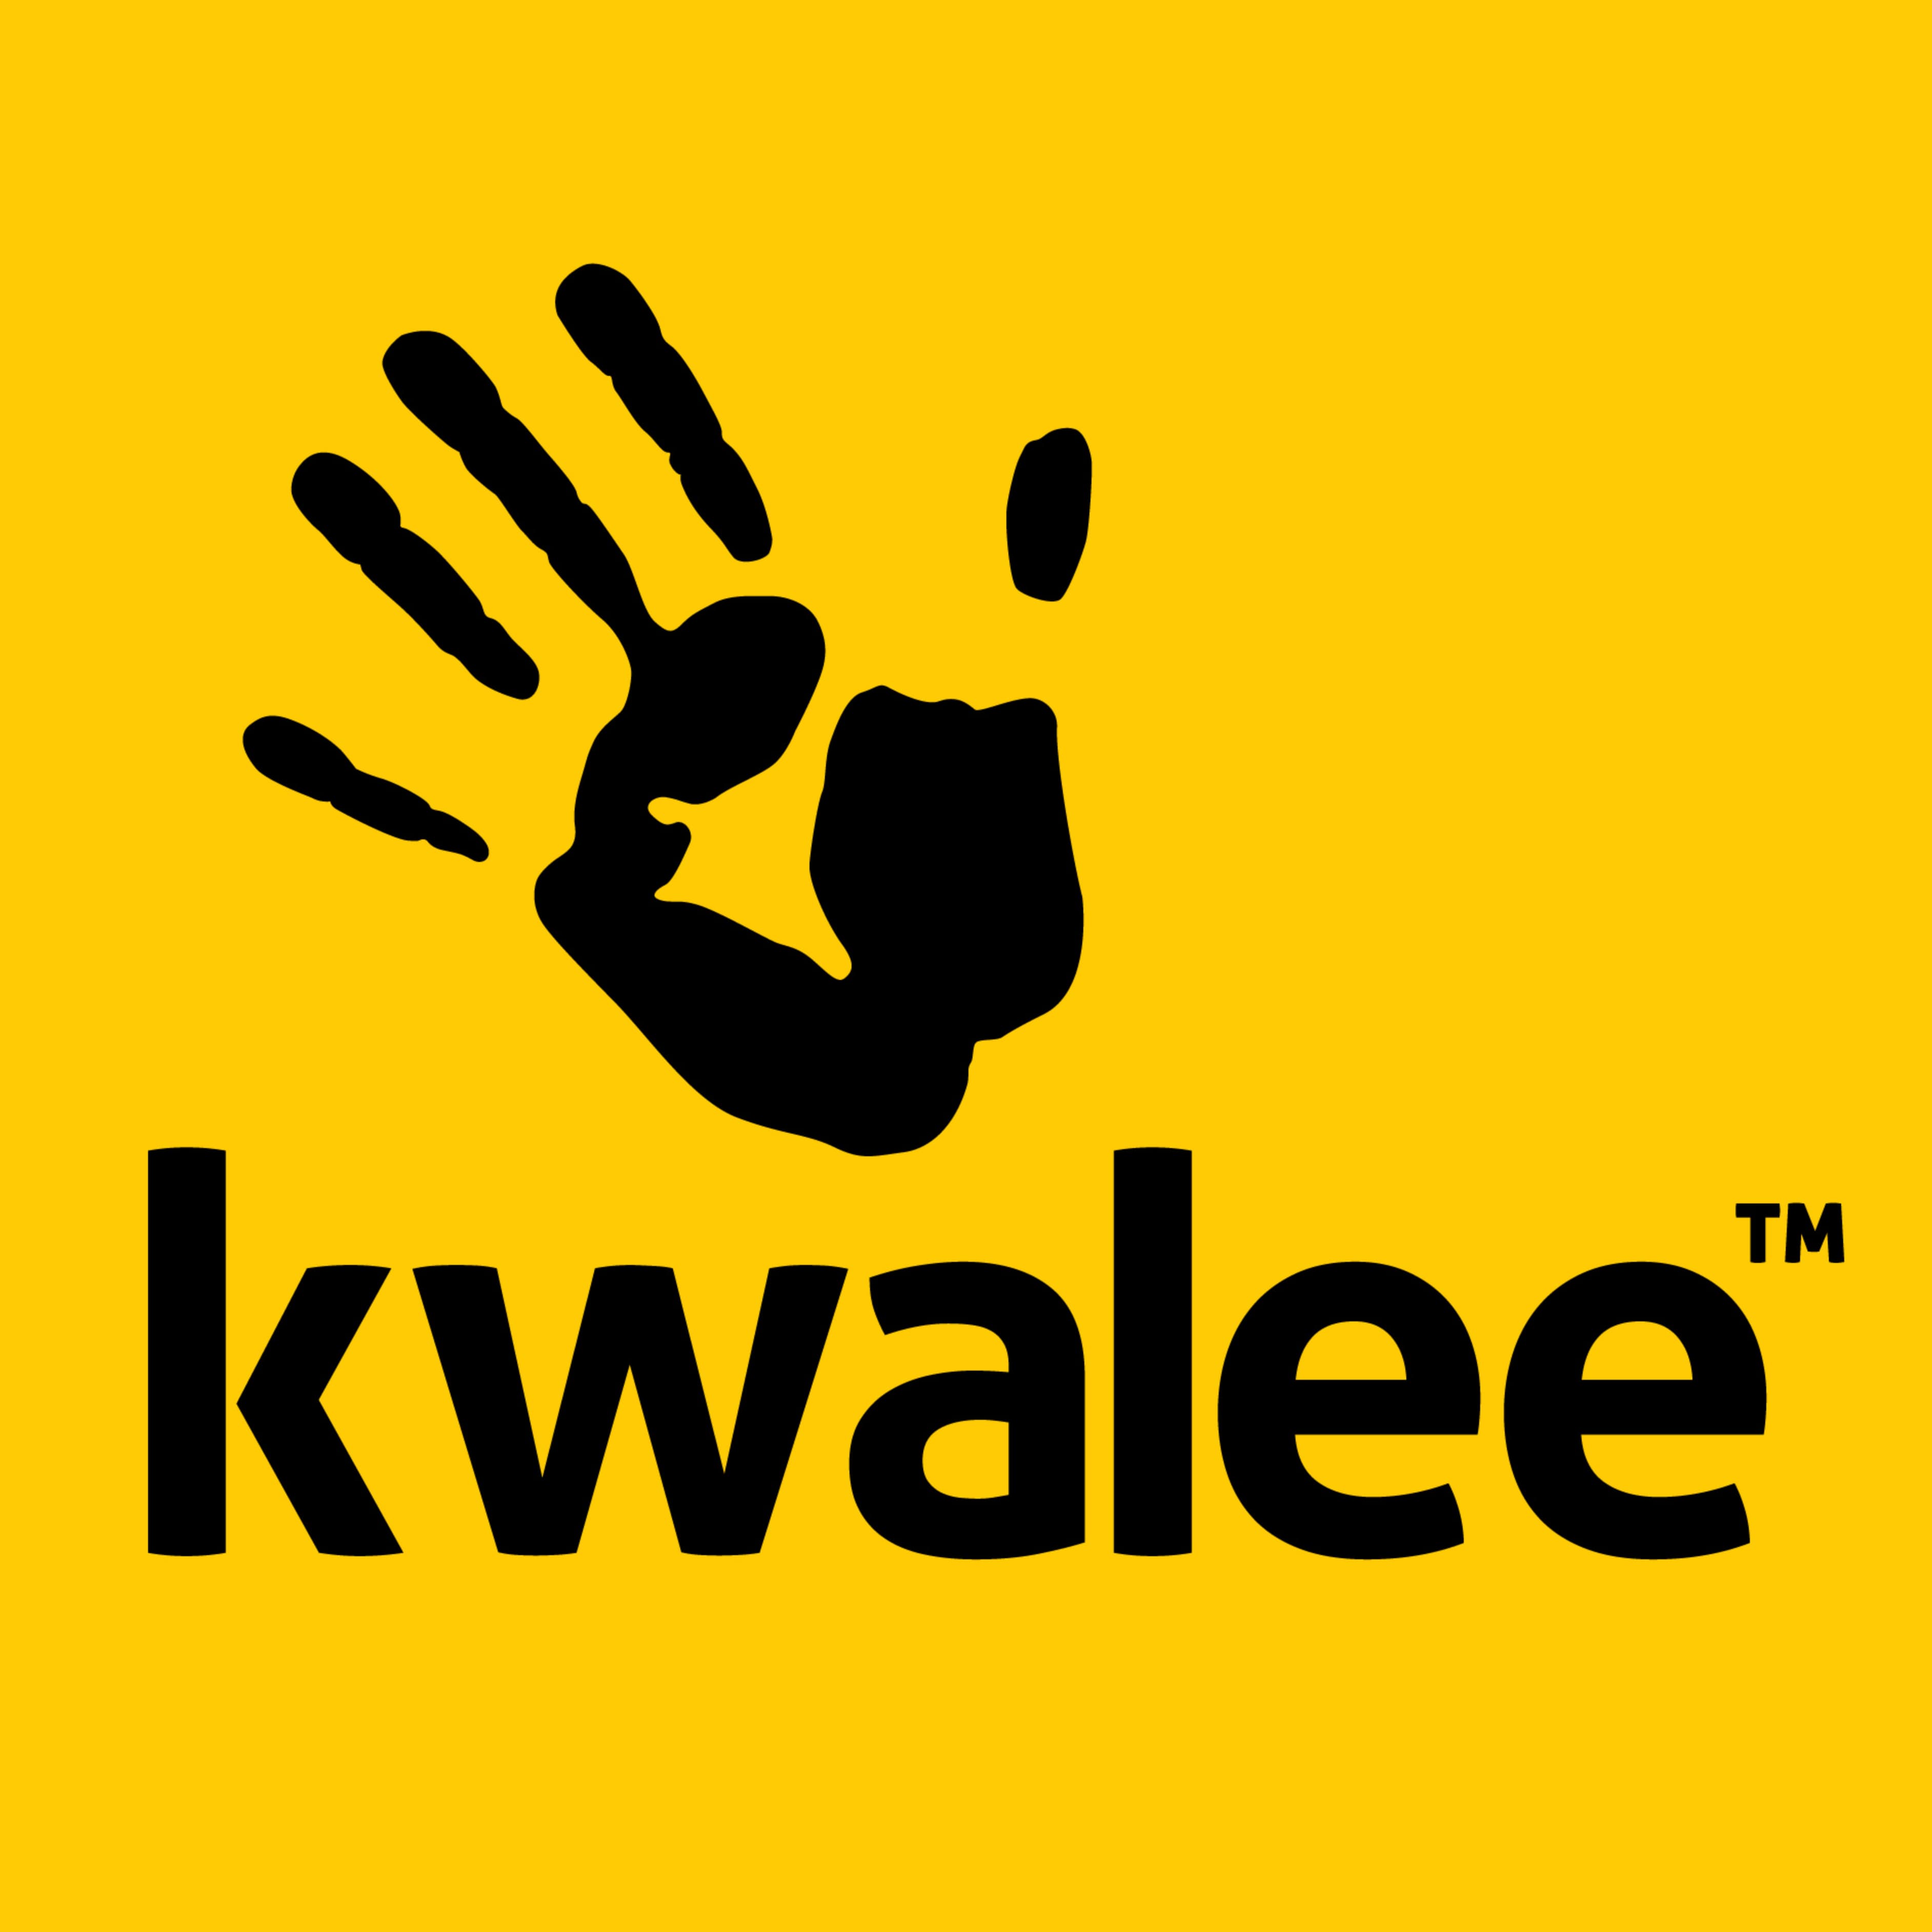 Kwalee's logo